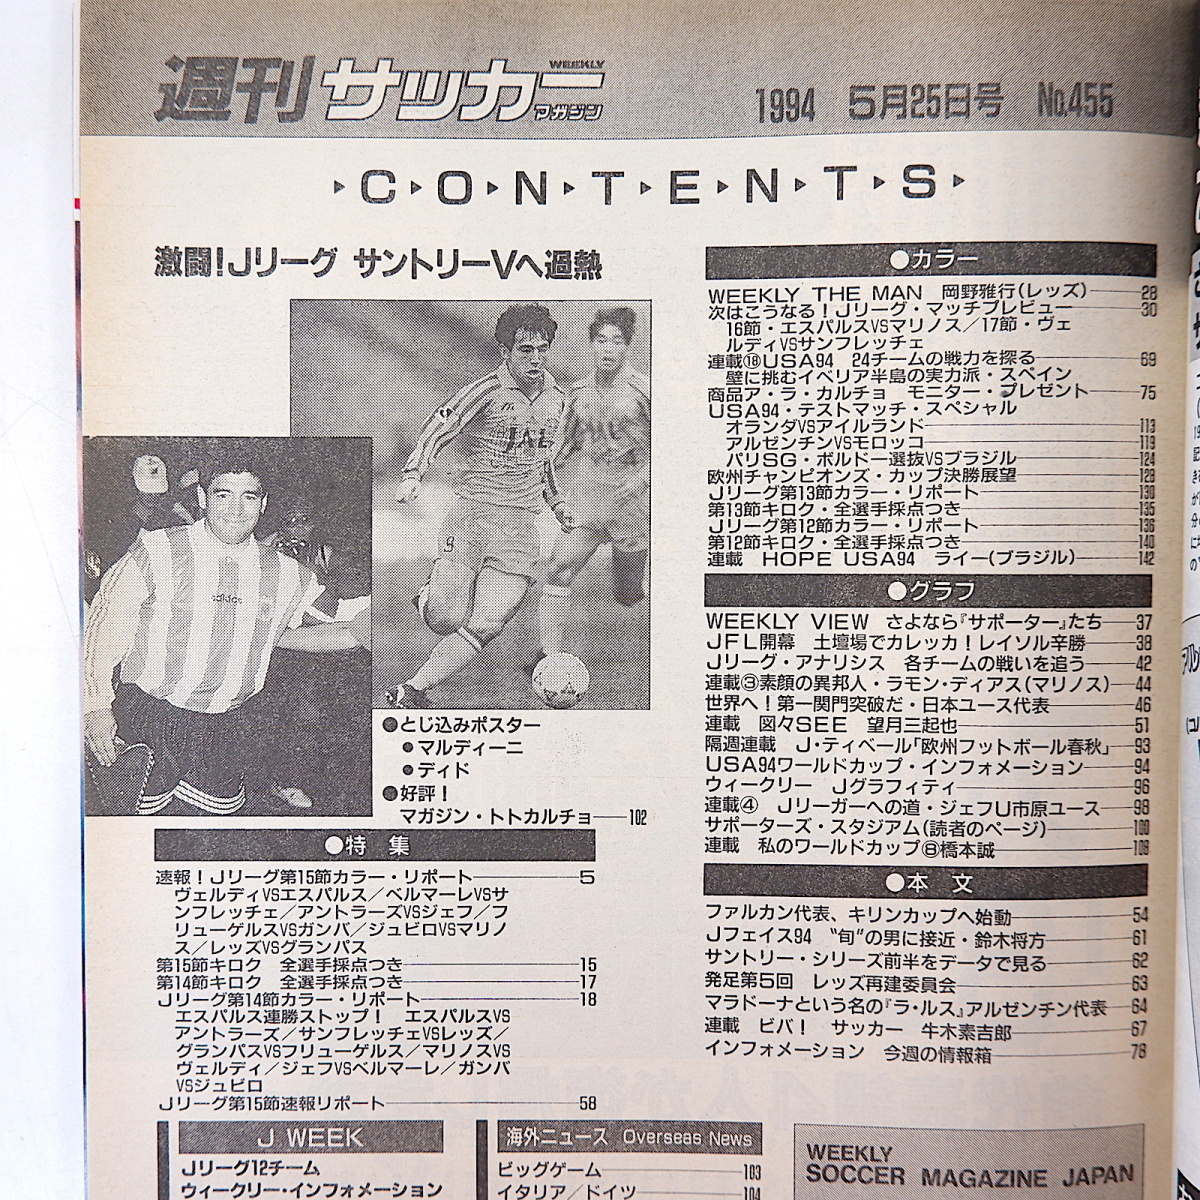  weekly soccer magazine 1994 year 5 month 25 day number * Japan representative camp hill .. line J Lee g news flash Suzuki . person American W cup Spain lamon Dias Kashiwa Ray soru